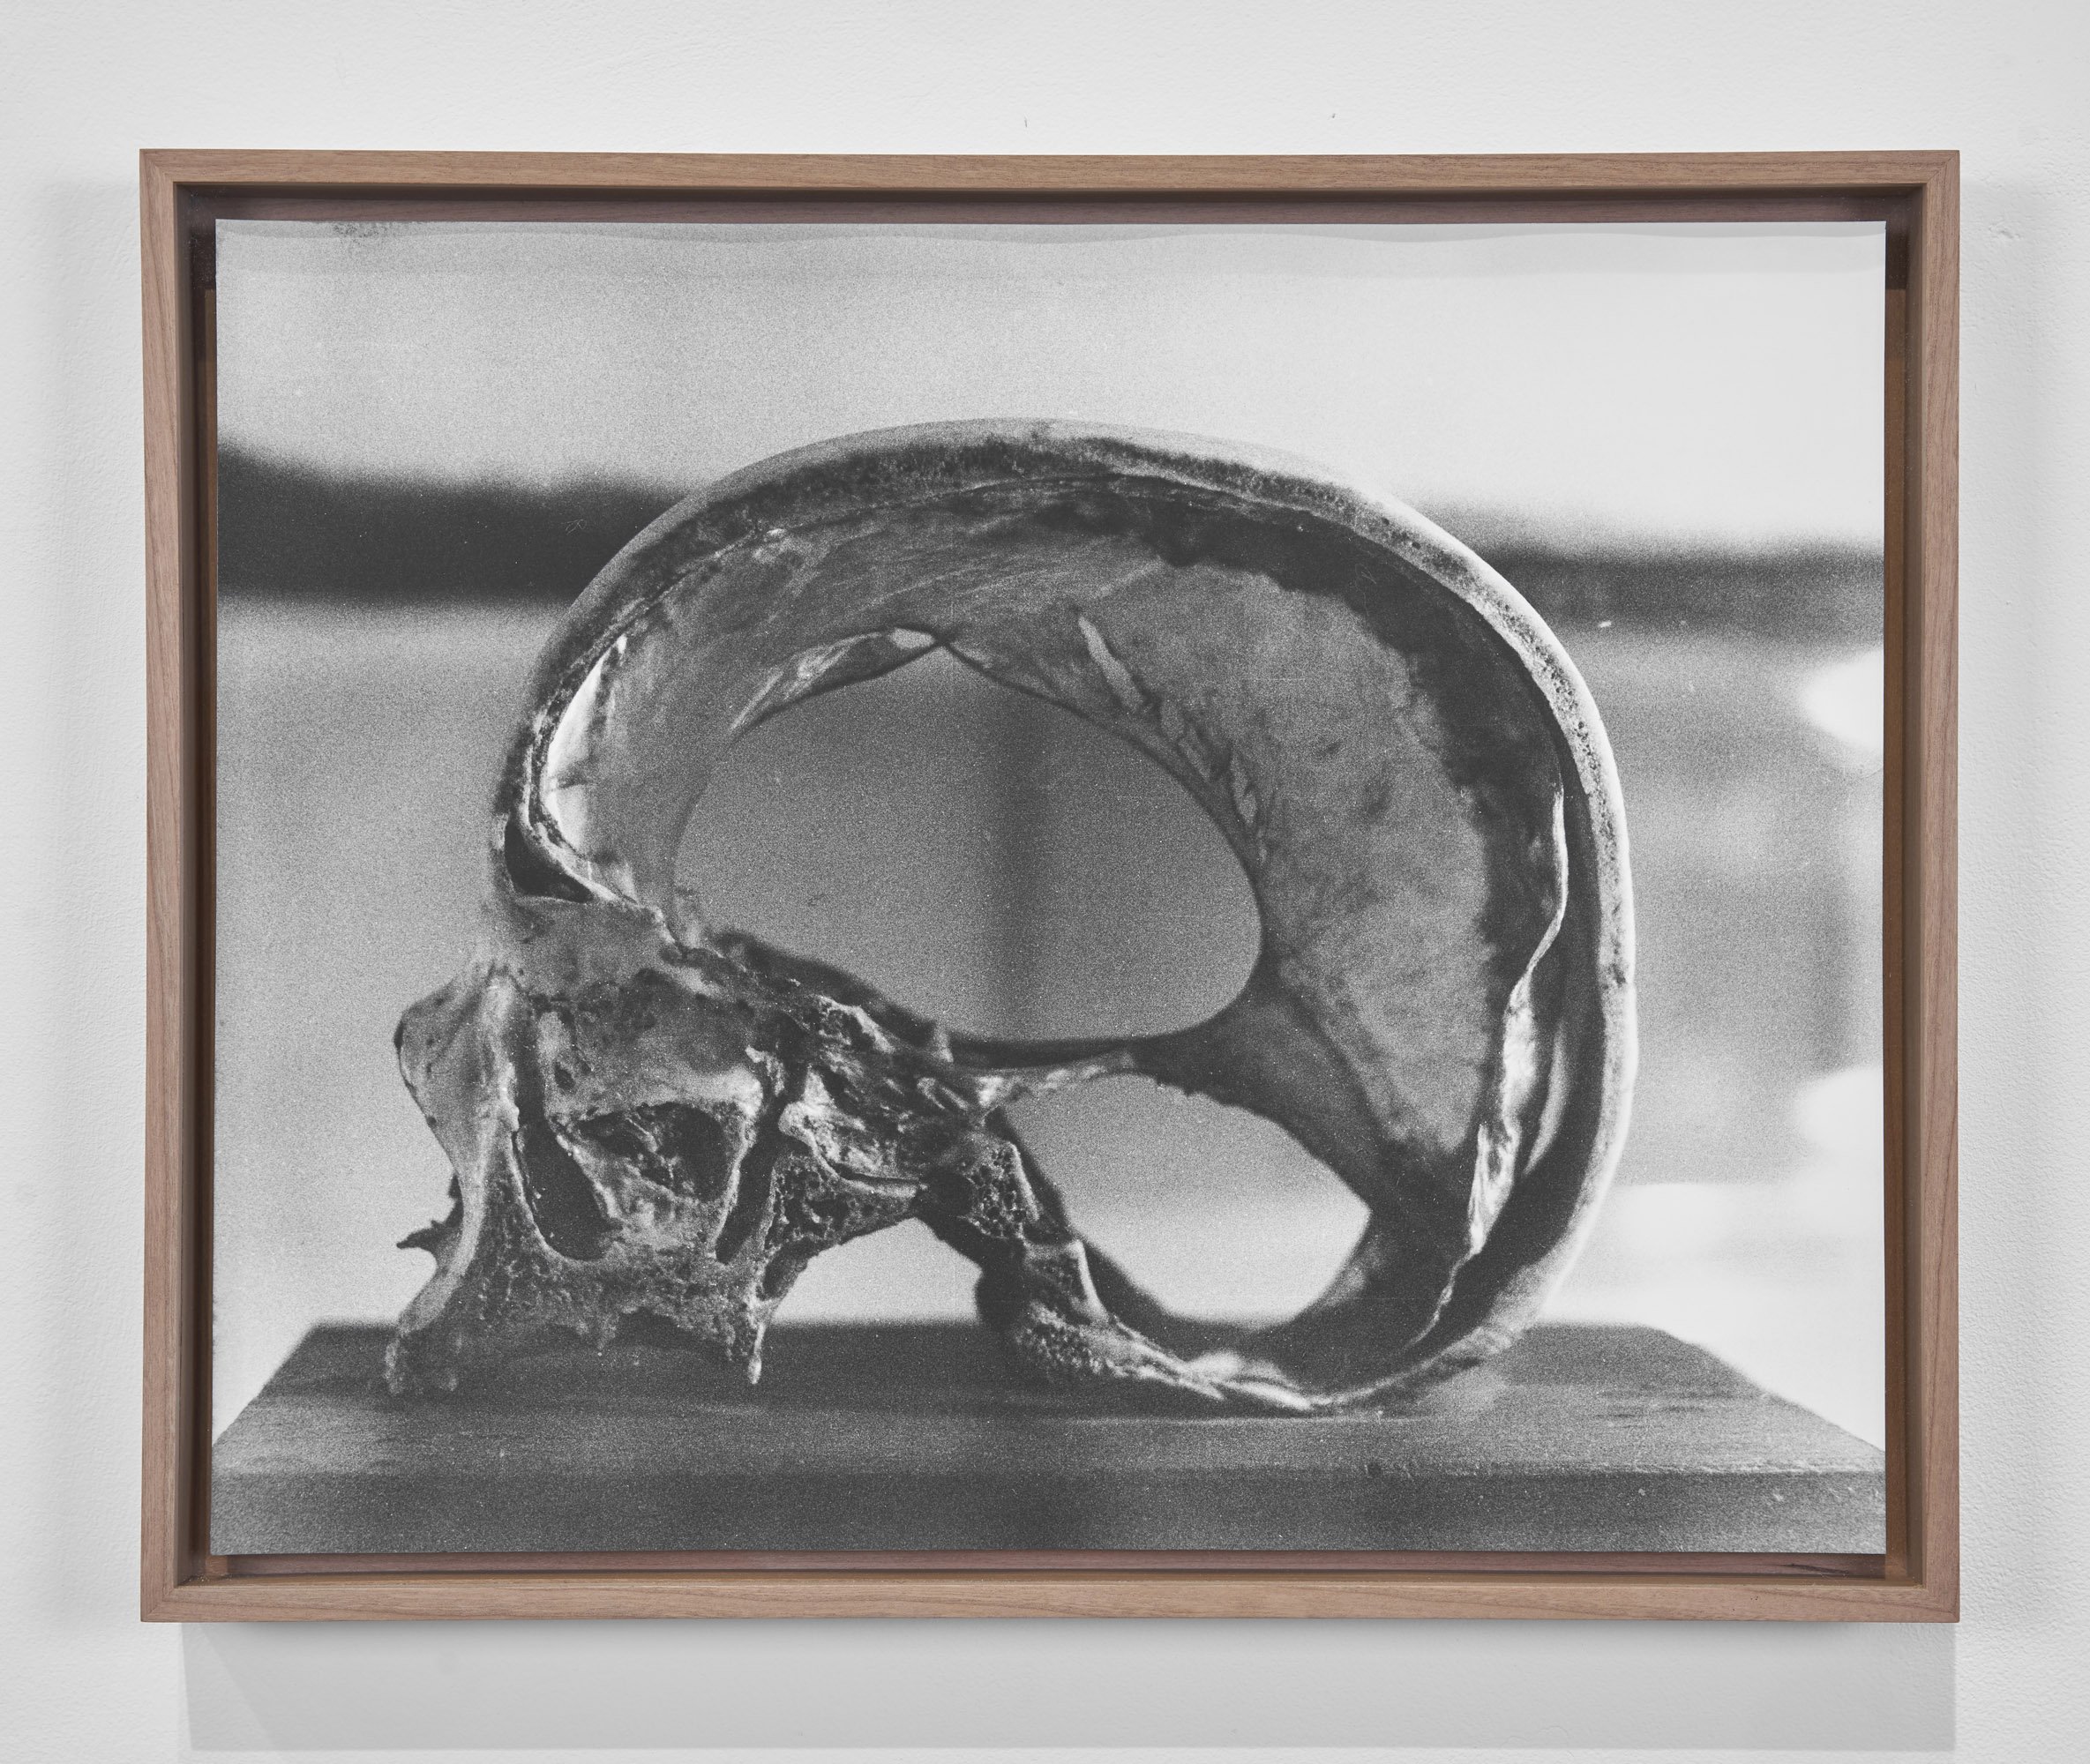  Skull Cross-Section, Bologna 2019-20  2020  Unique fibre based silver gelatin print in cherry frame   32 x 40 cm  1/1 